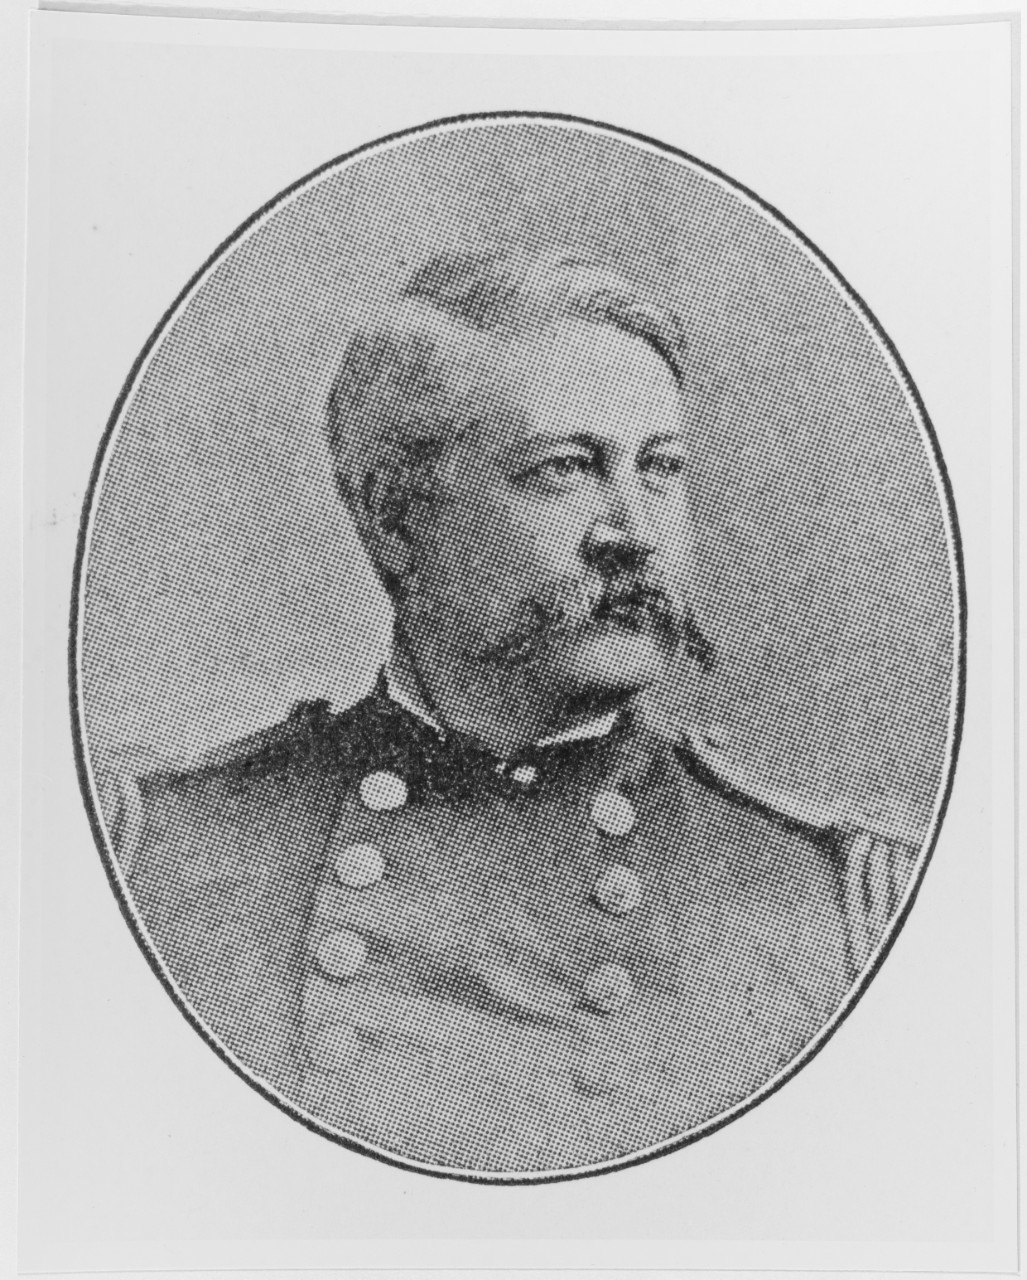 George F. Winslow, portrait